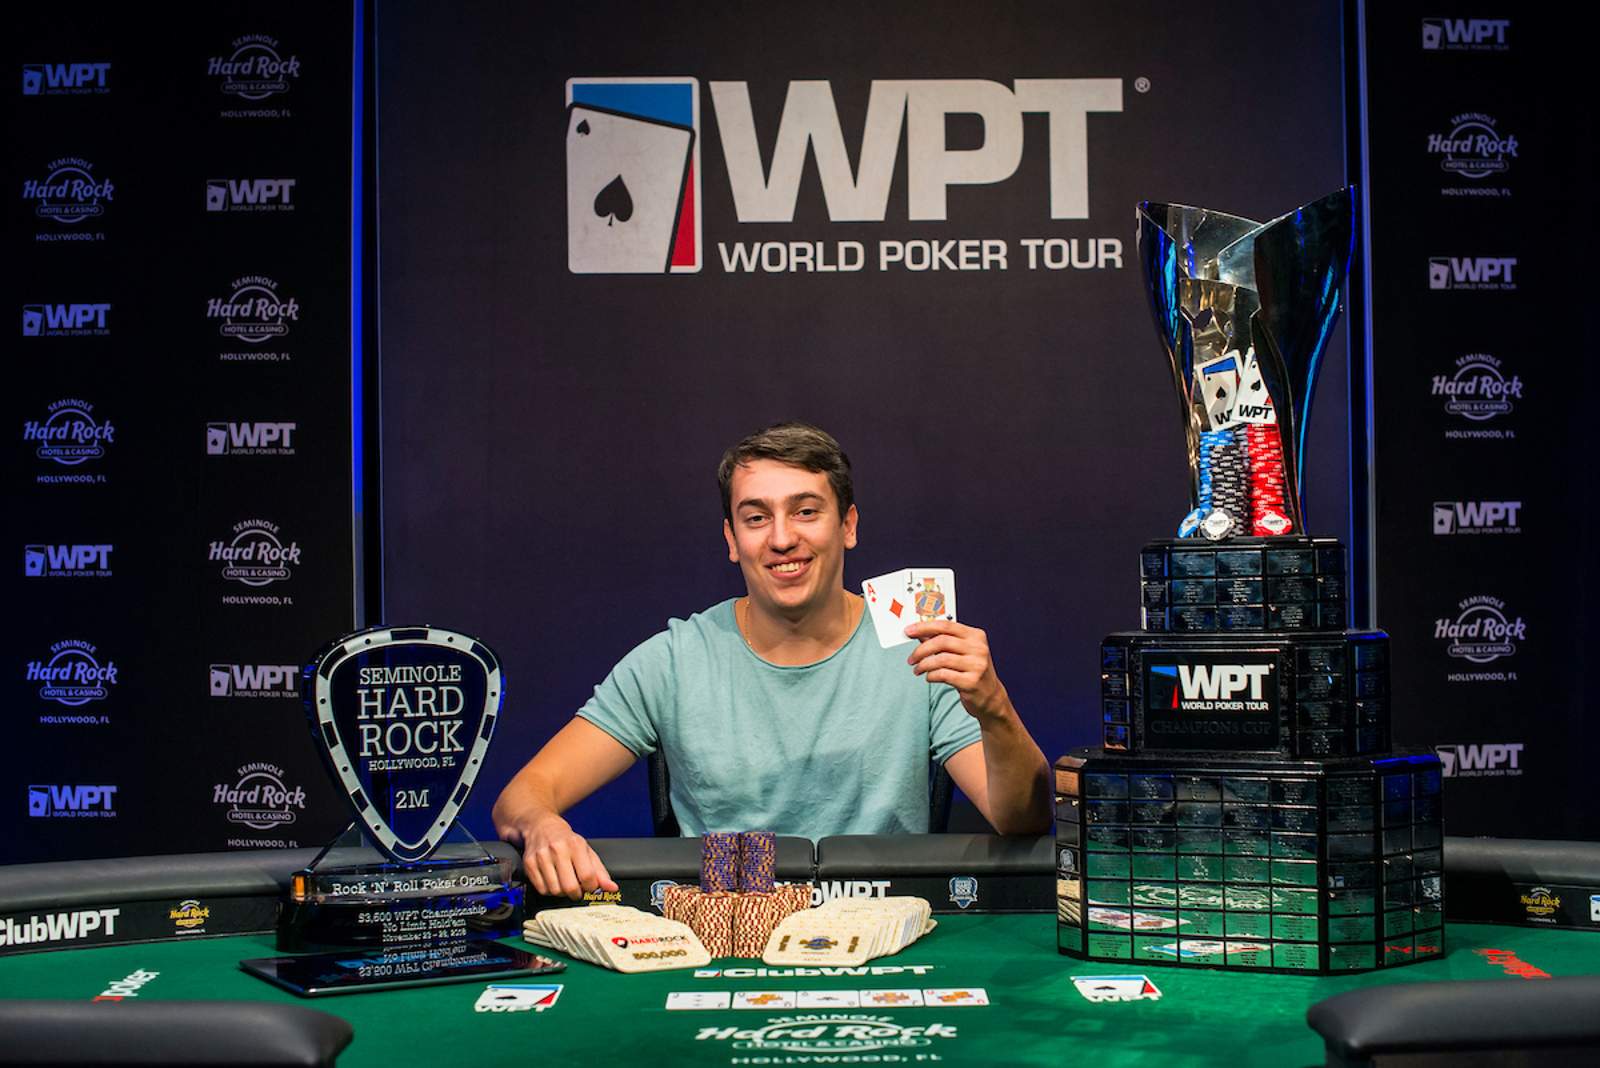 Pavel Plesuv Wins WPT Rock 'N' Roll Poker Open for $504K